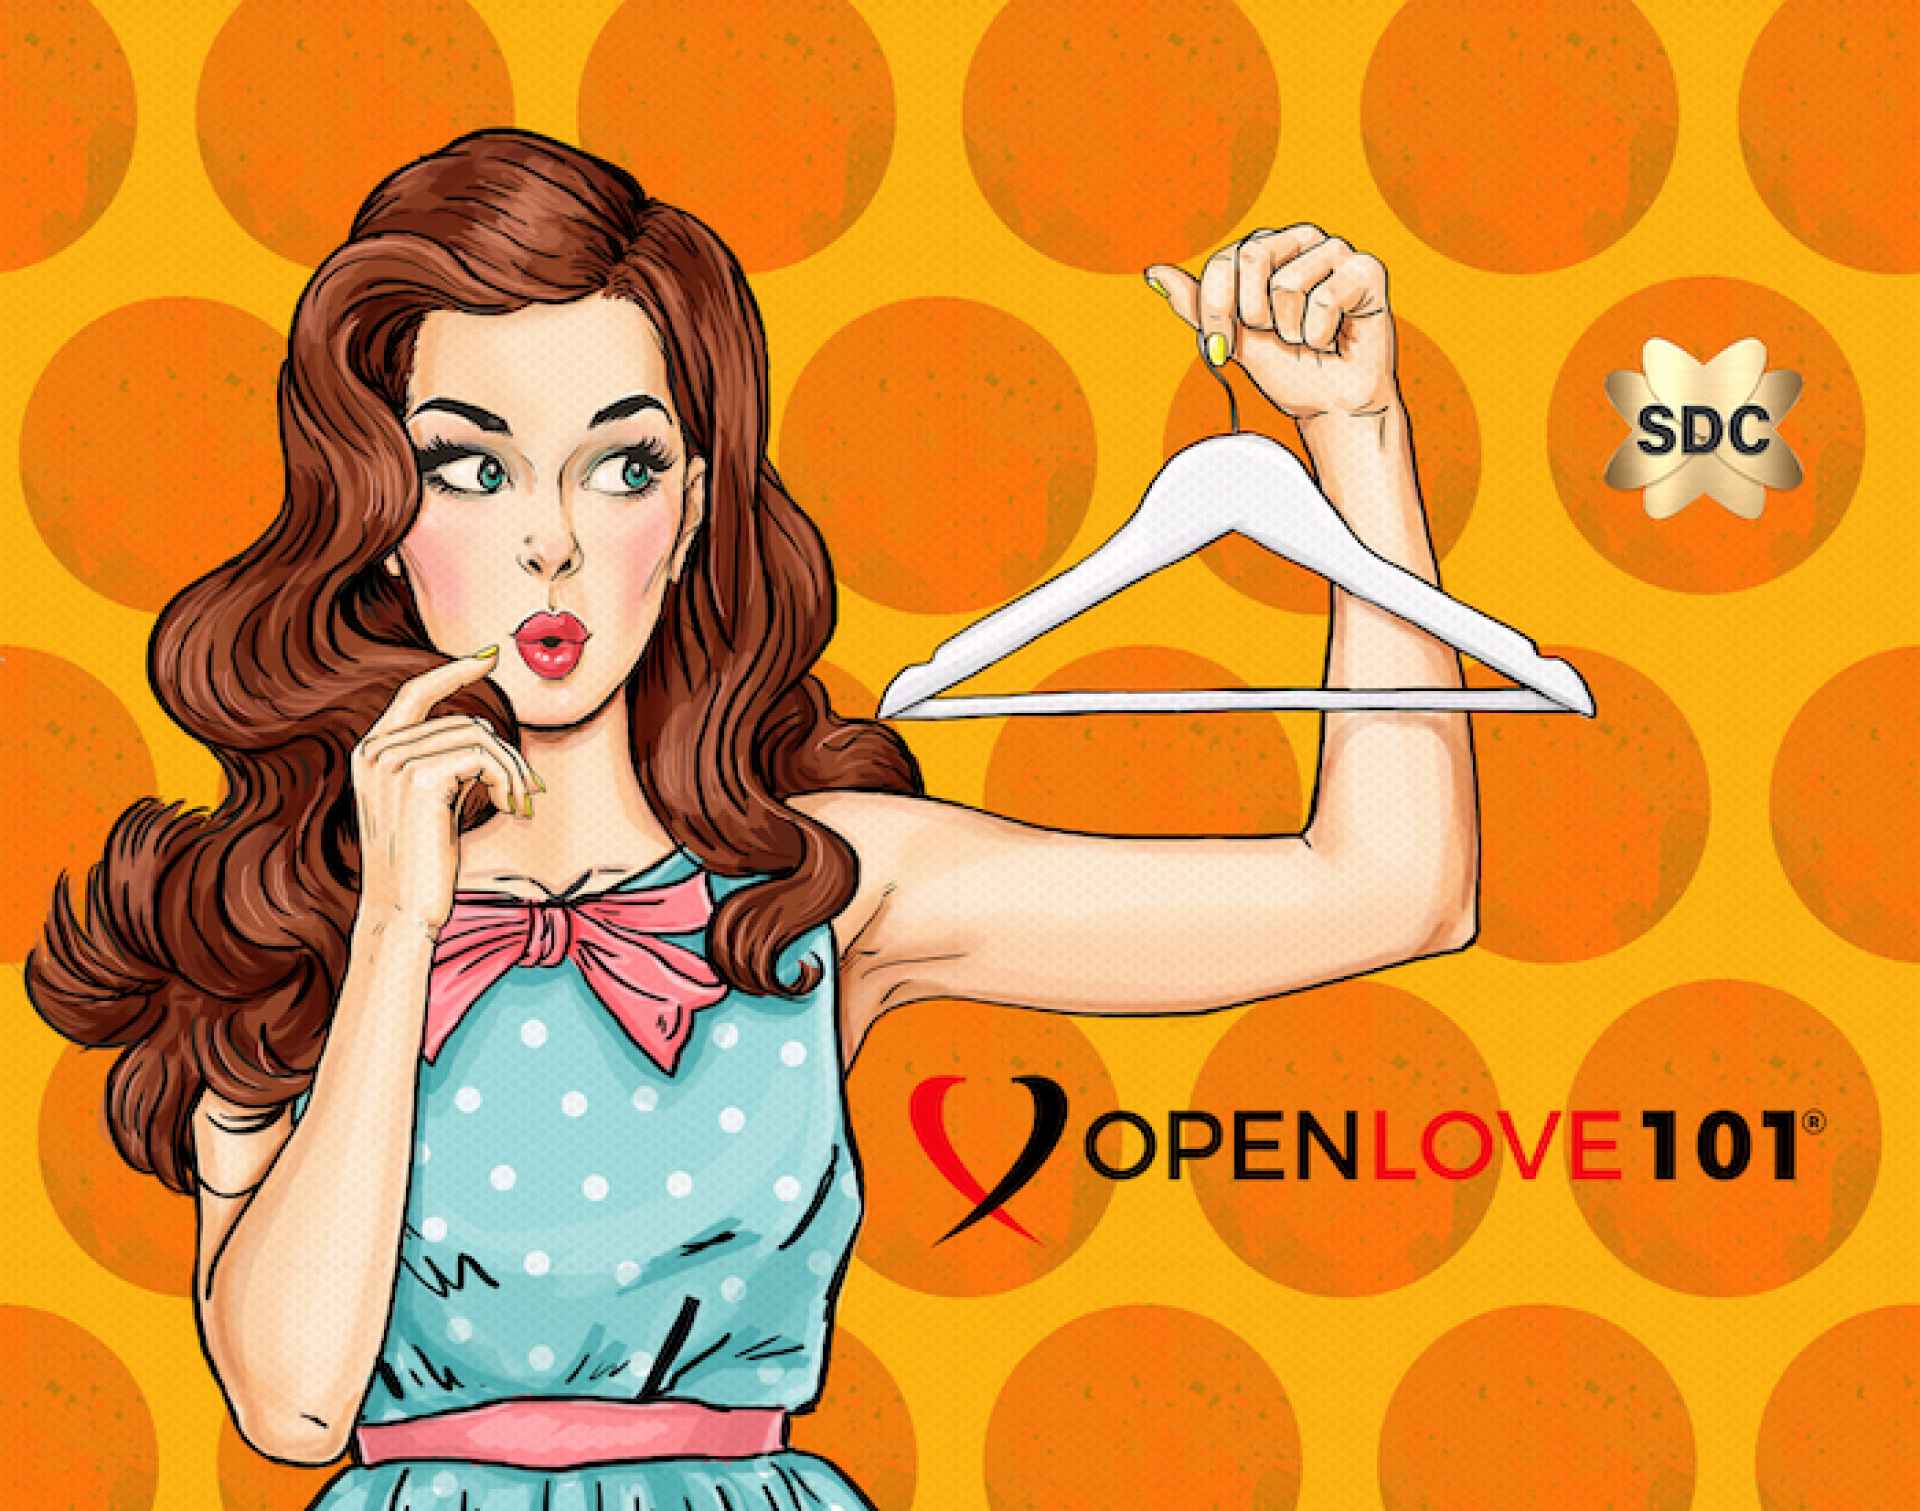 Openlove 101 SDC Newbie Lifestyle Club Guide Dress Code